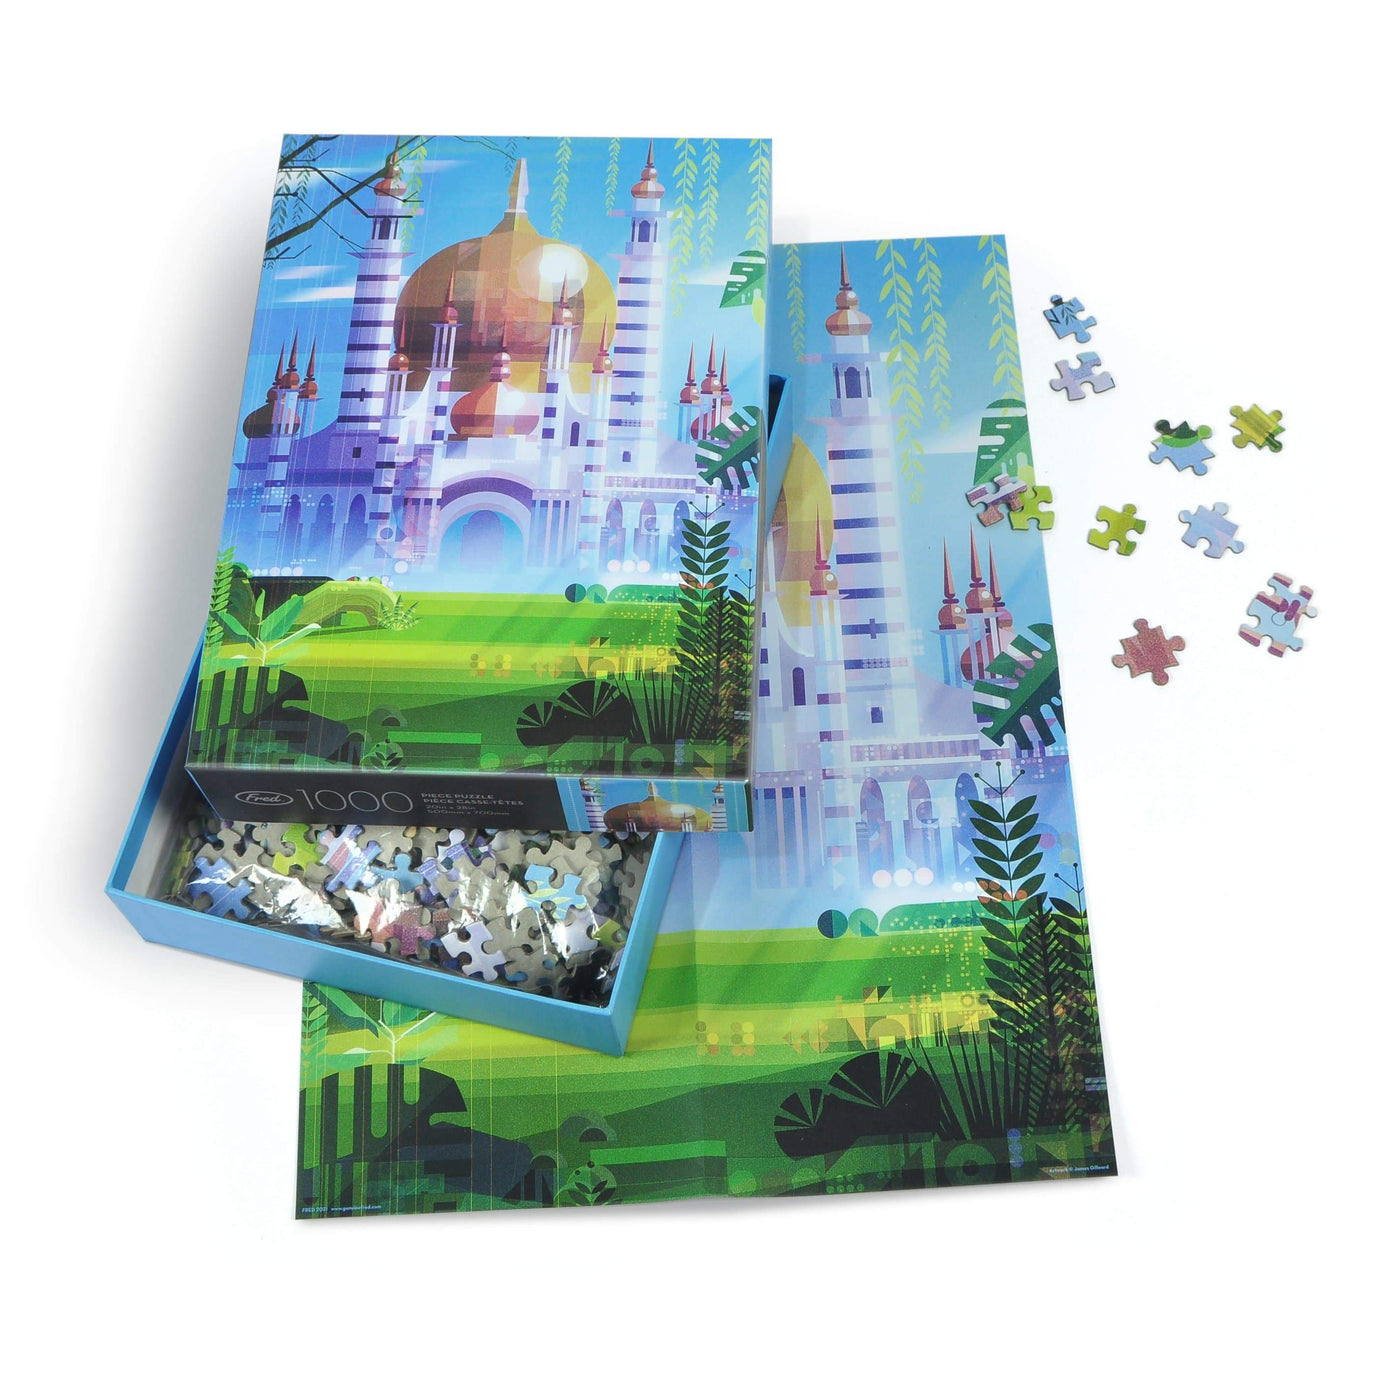 Temple | 1,000 Piece Jigsaw Puzzle